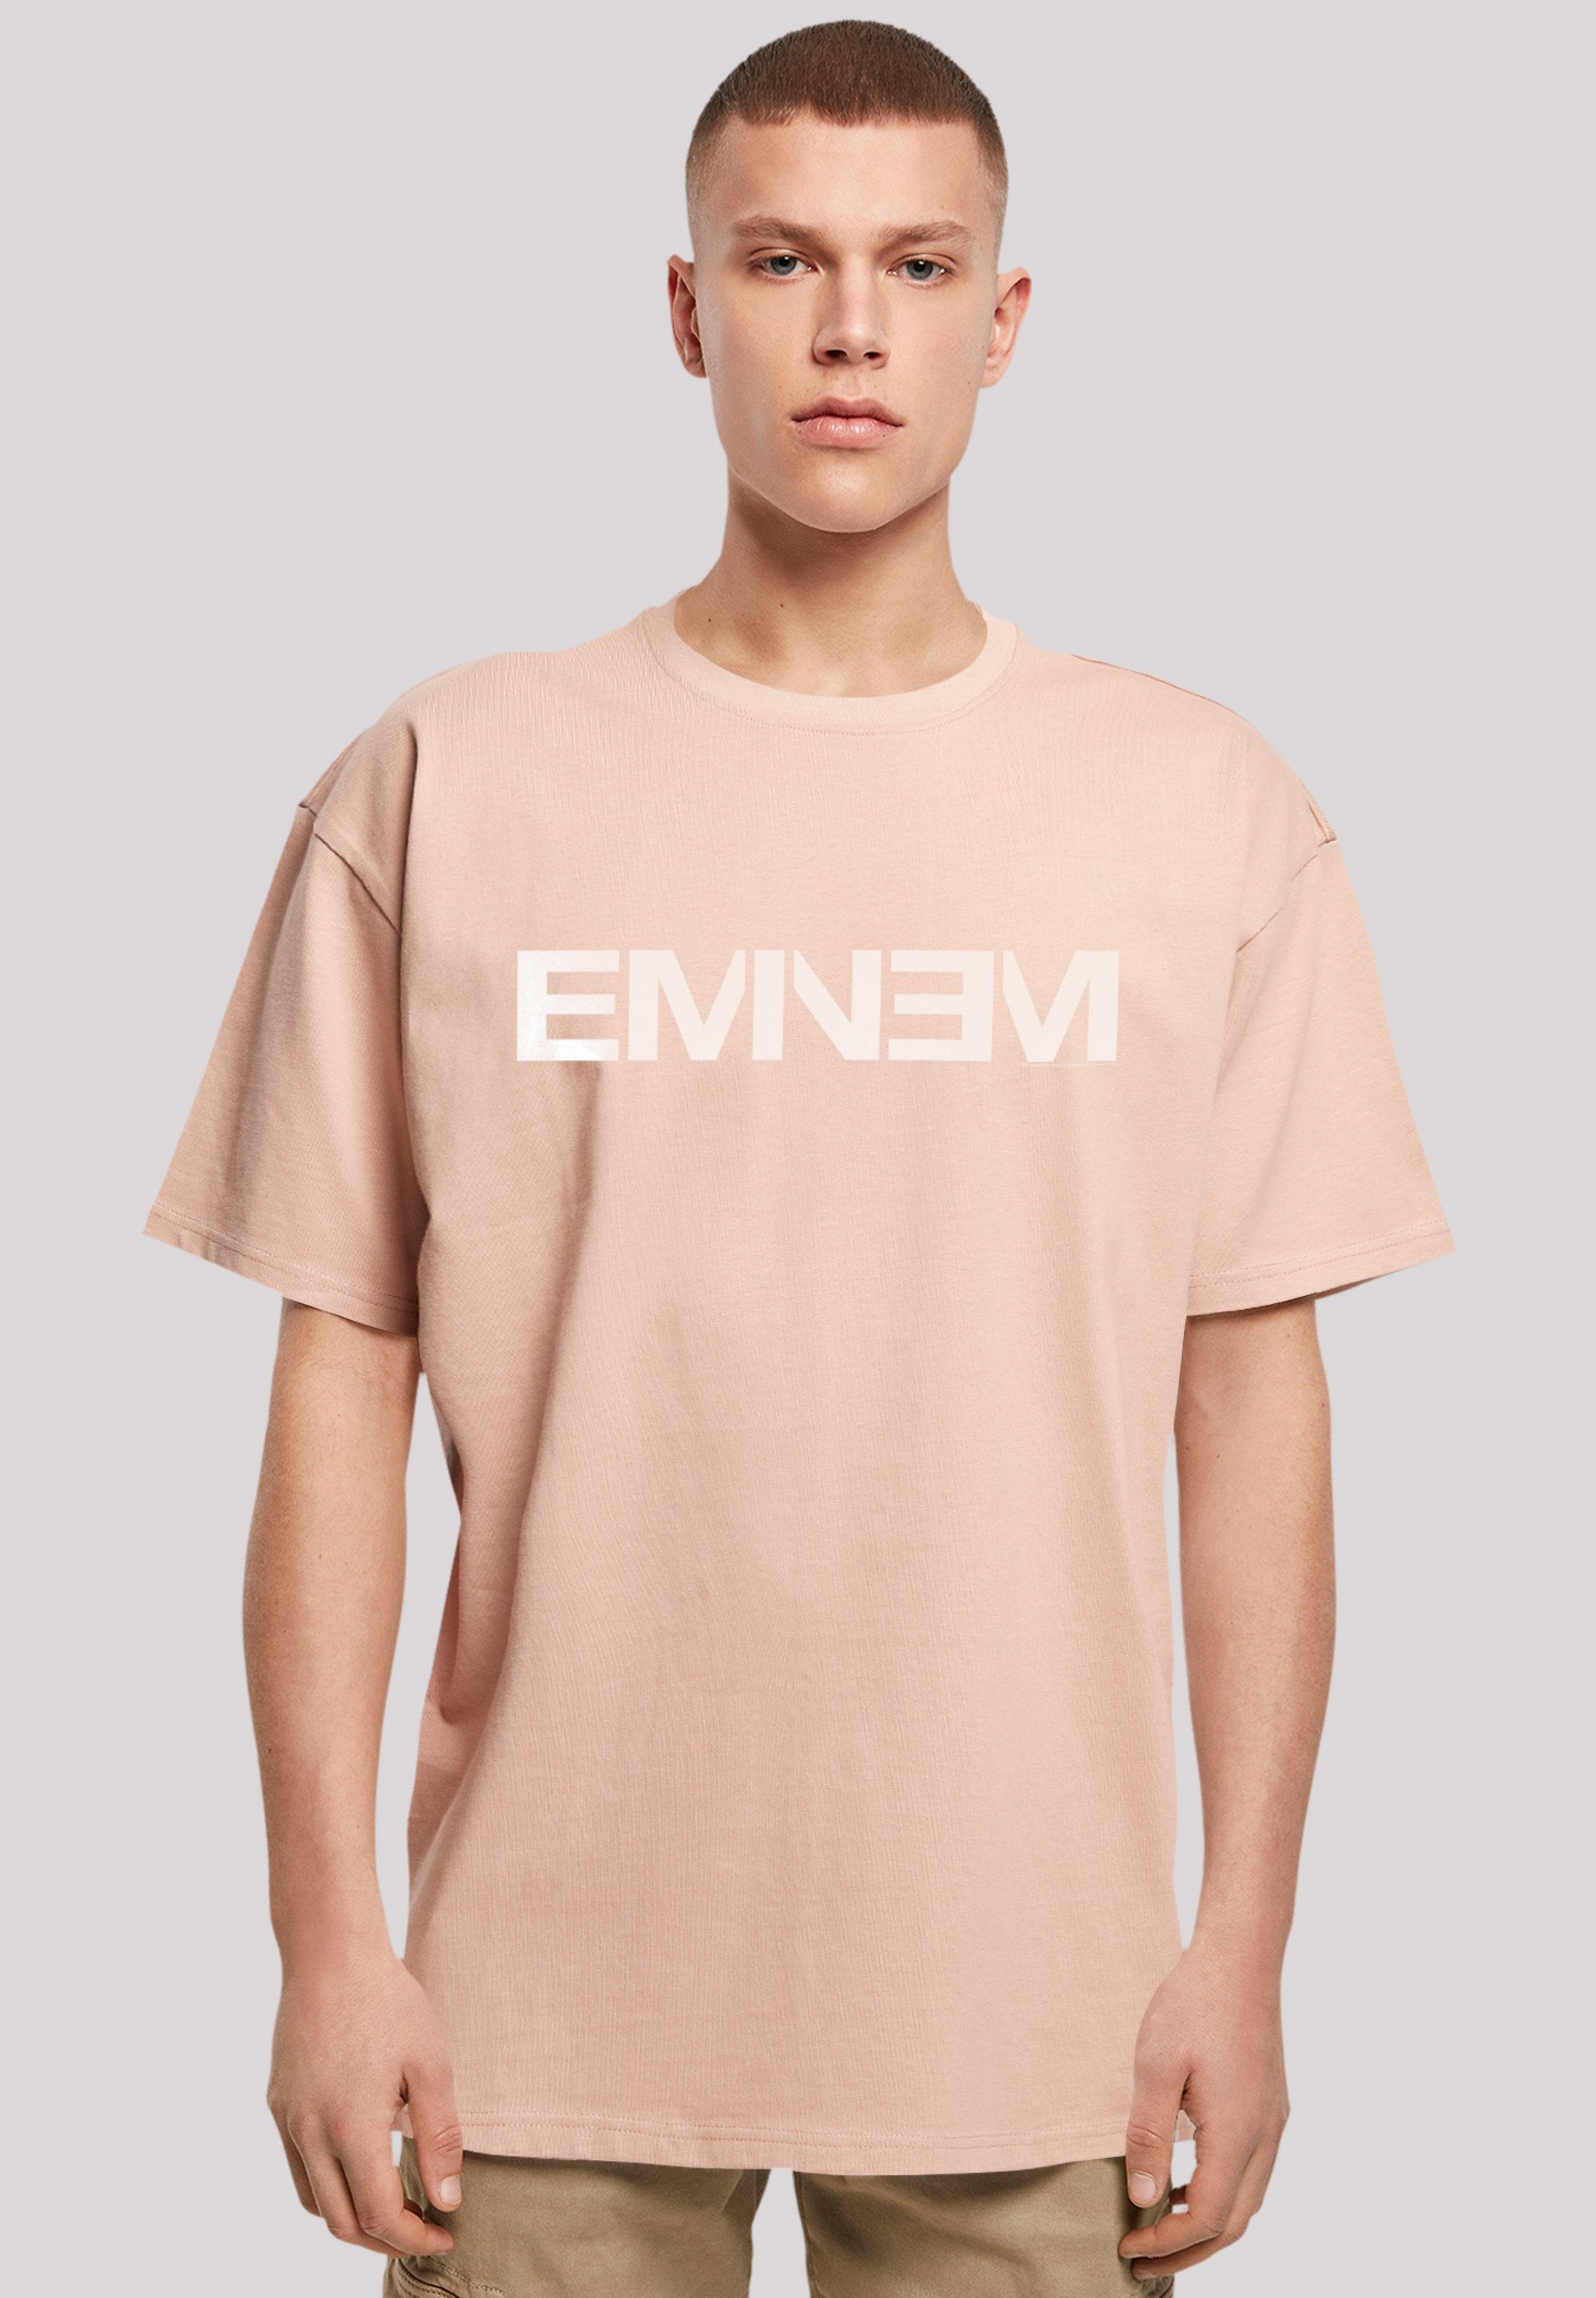 F4NT4STIC T-Shirt Eminem Hip Hop Rap Music Premium Qualität, Musik amber